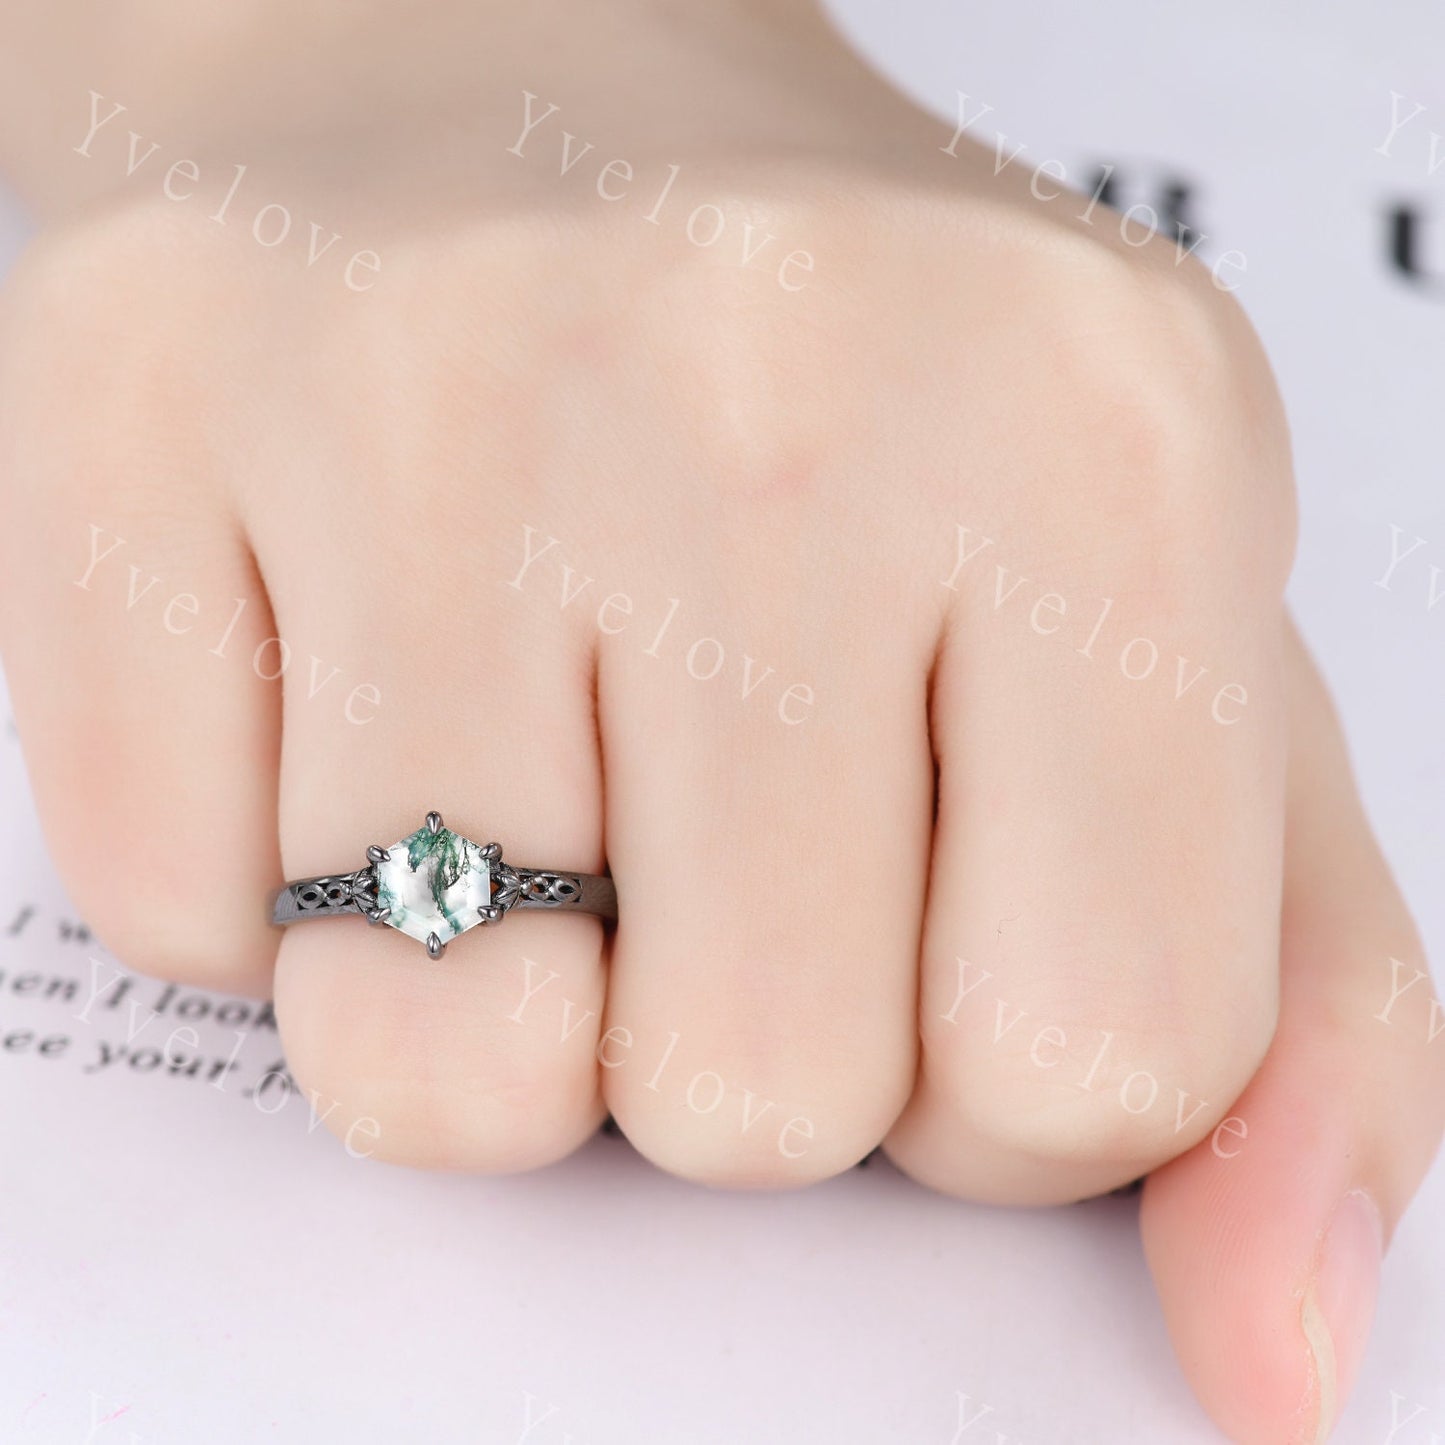 Hexagon Shaped Moss Agate Engagement Ring 925 Black Silver Vintage Moss Agate Wedding Ring Enhancer Band Art Deco Bridal Ring Set For Women